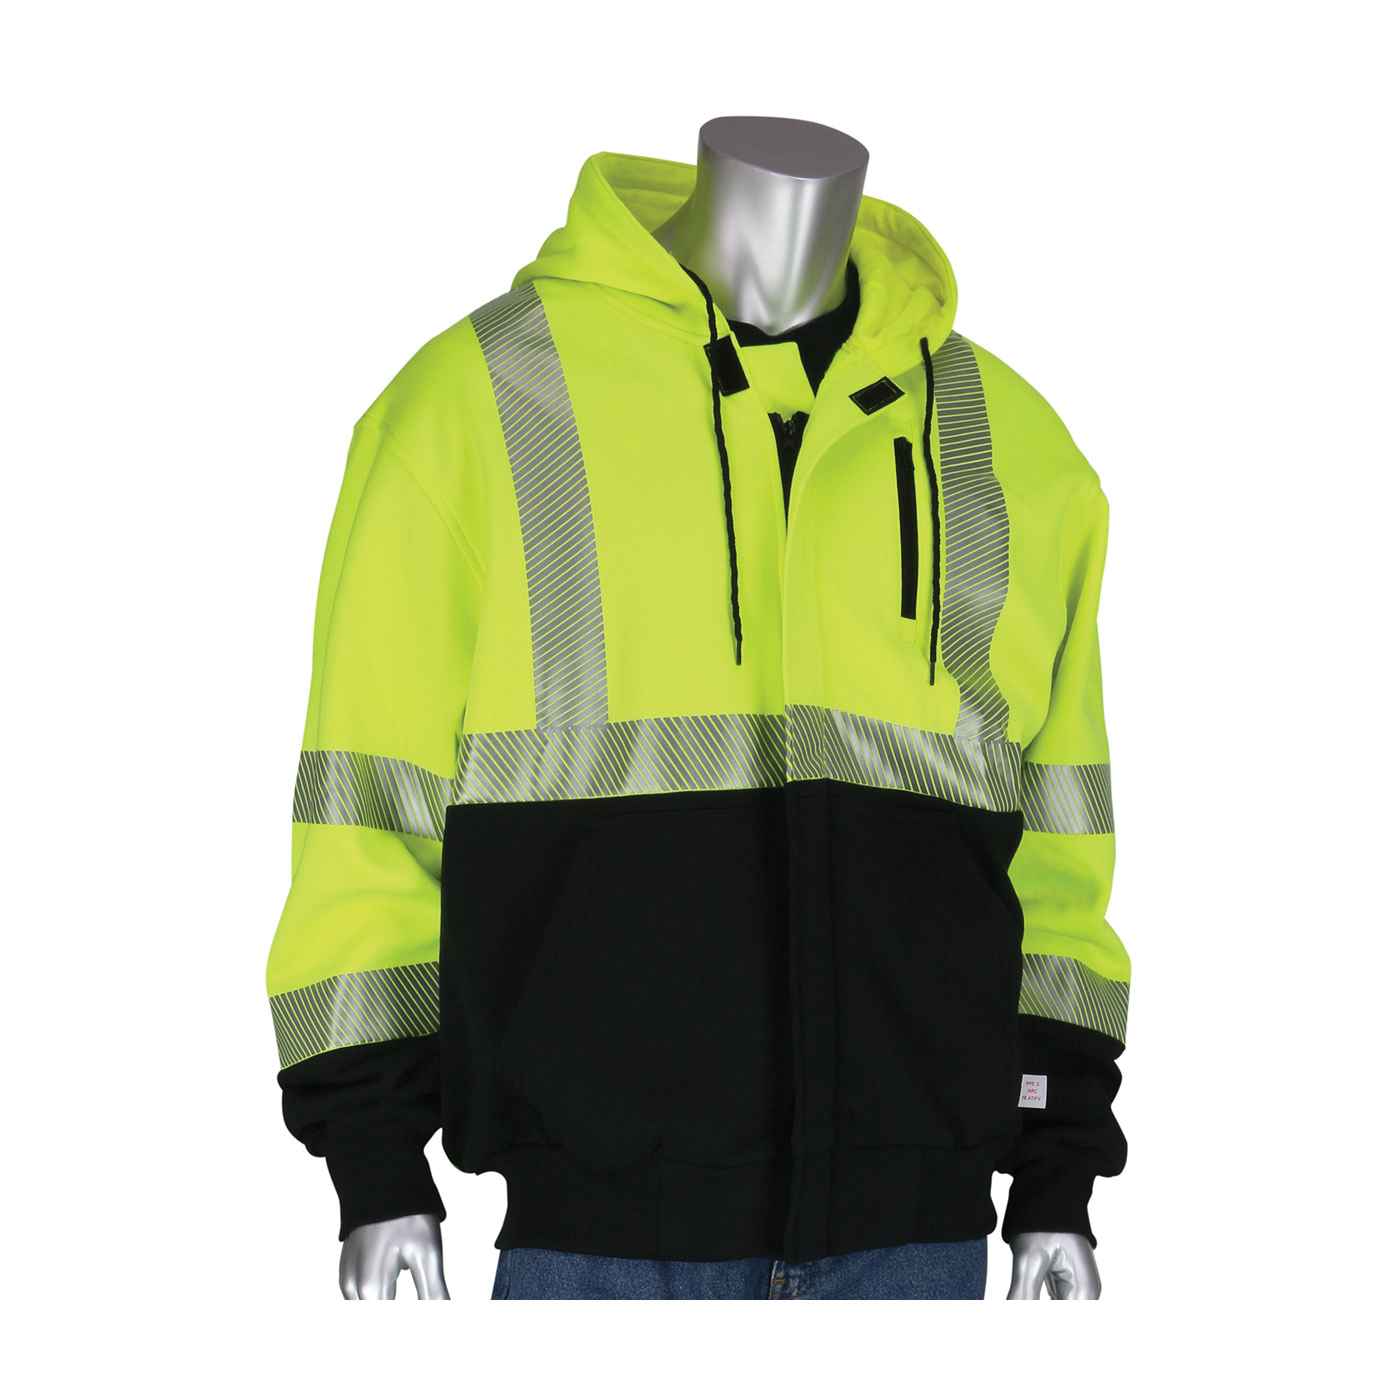 PIP® 385-1370FR-LY/3X 385-1370FR Arc and Flame Resistant Hooded Sweatshirt With Black Bottom, Unisex, 3XL, Hi-Viz Yellow/Black, 60% Modacrylic/40% Cotton, 32 in L